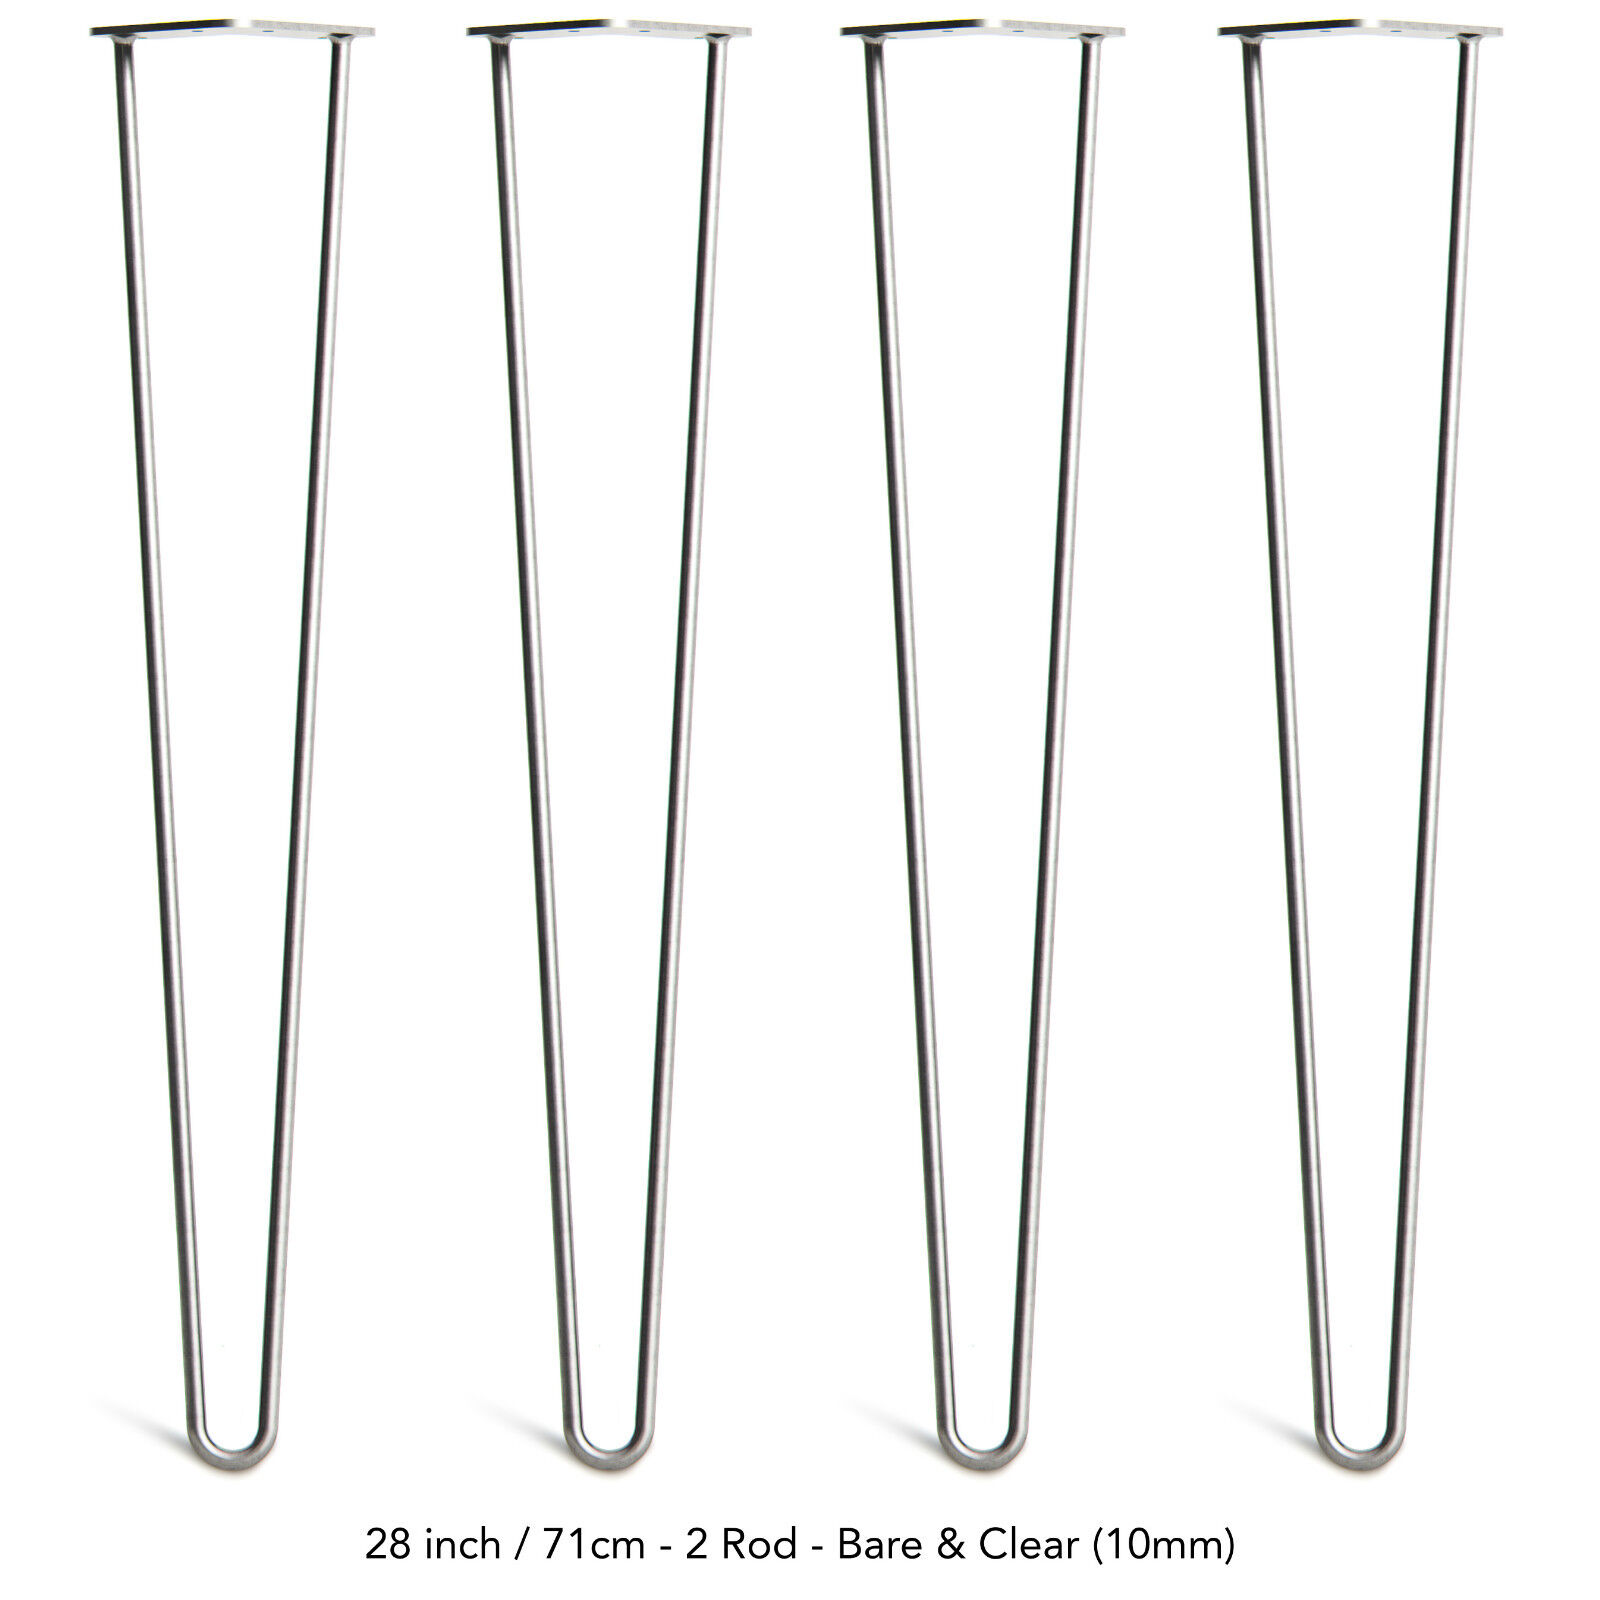 4x Premium Hairpin Table Legs + FREE Screws, Guide, AND Protector Feet Worth £8! Super oferta specjalna cena wysyłkowa